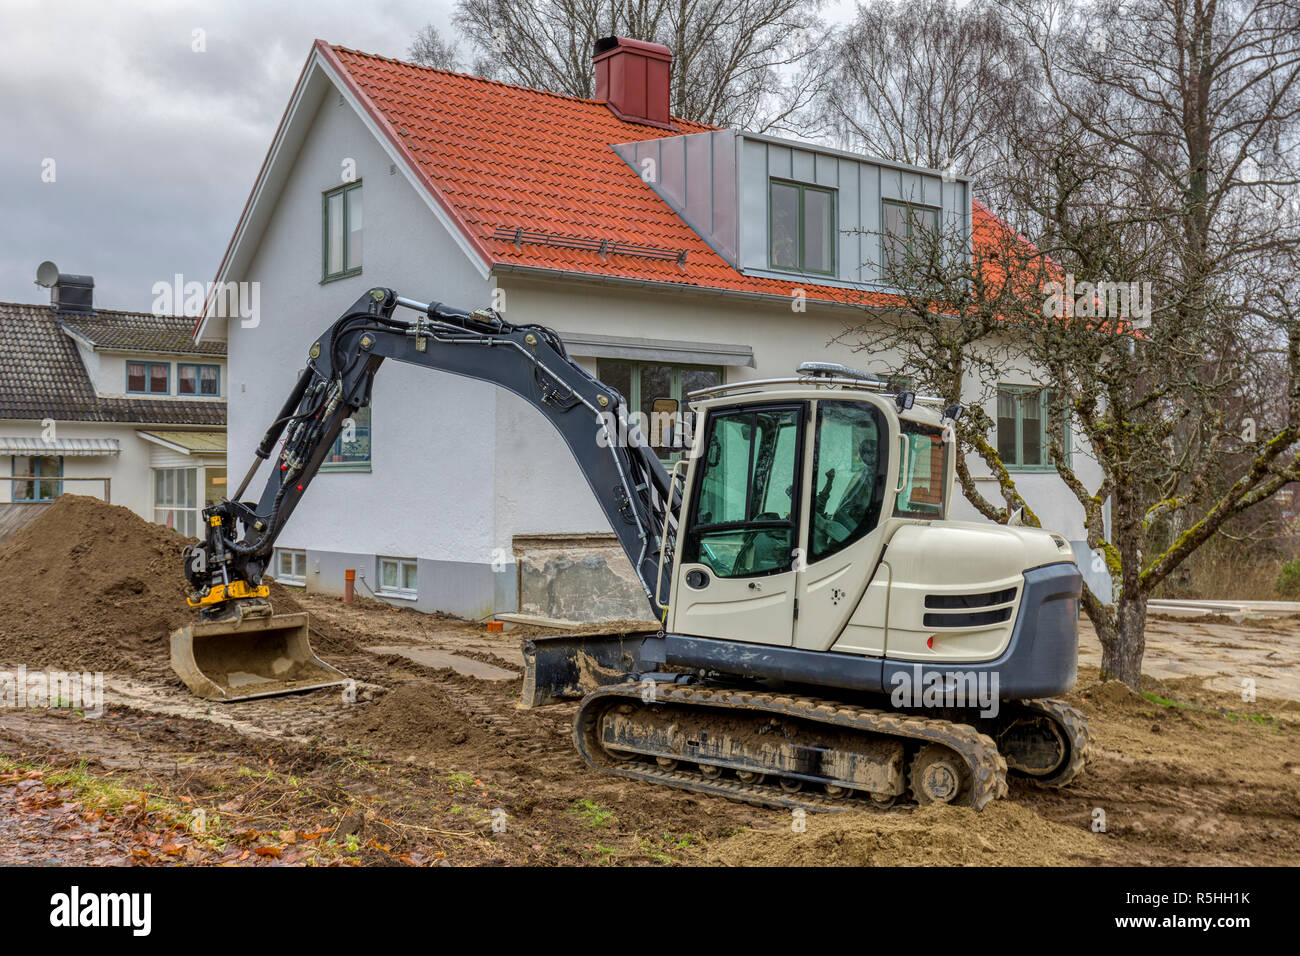 FLODA, SWEDEN - NOVEMBER 21 2018: Small excavator doing landscaping work in garden of detached house Stock Photo